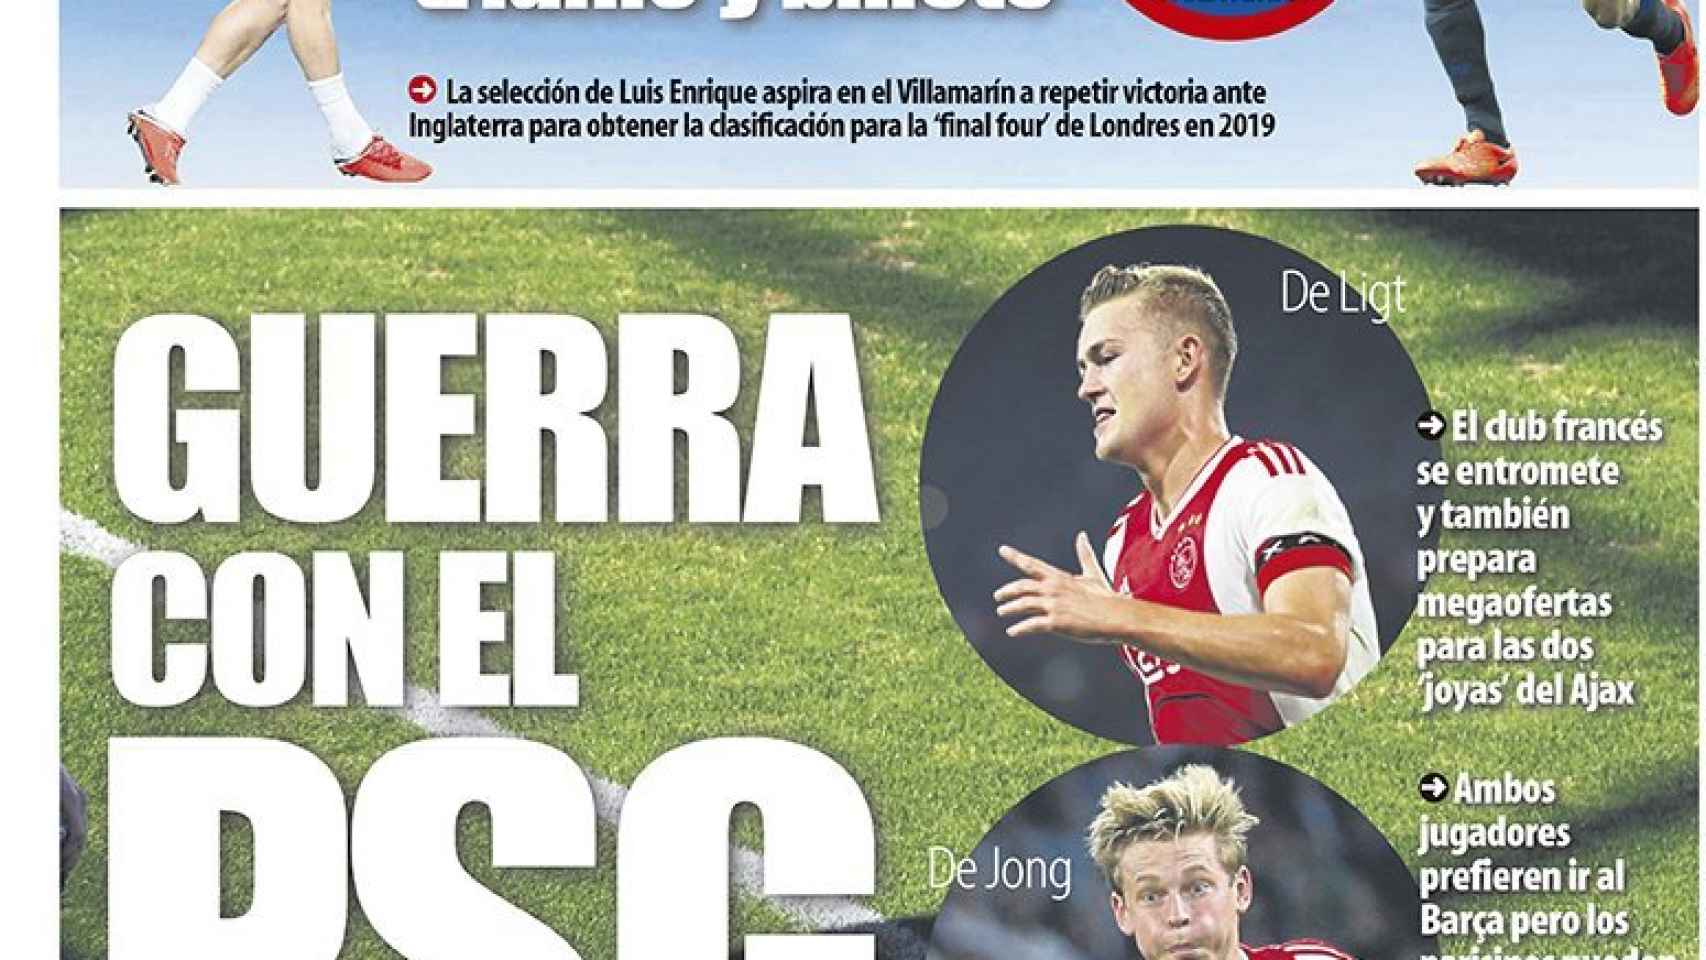 La portada del diario Mundo Deportivo (15/10/2018)1706 x 960